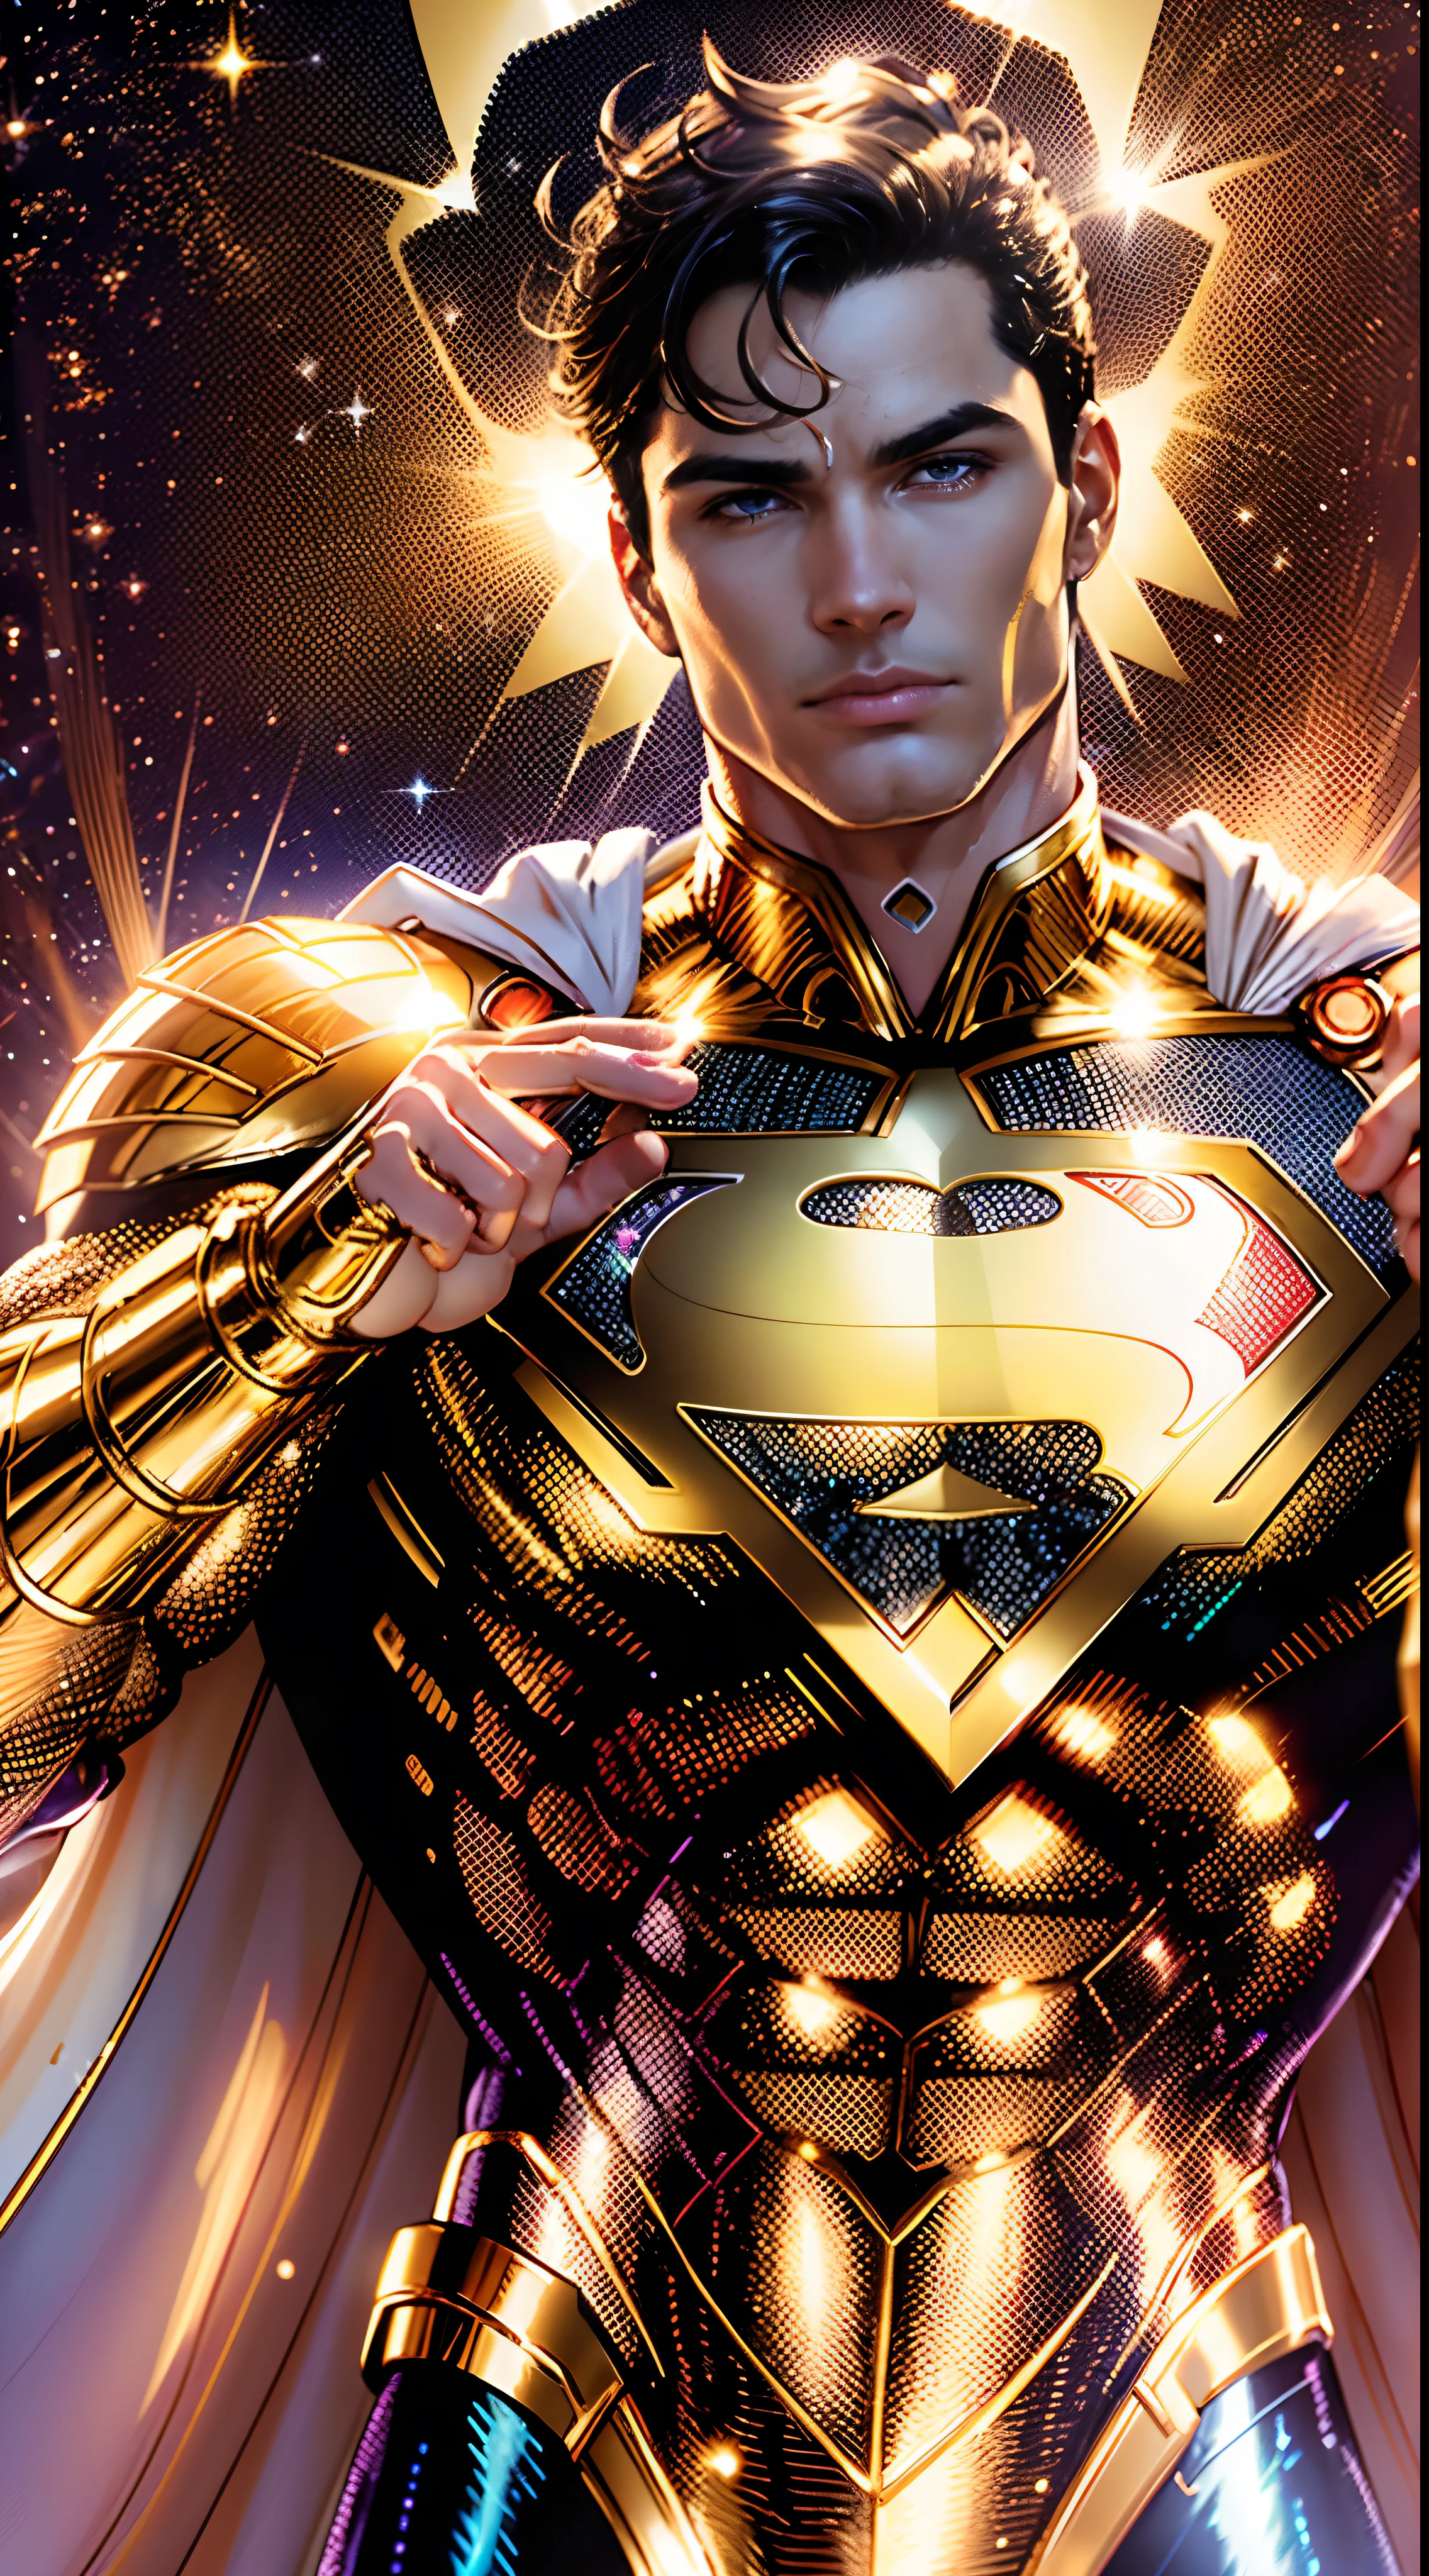 Golden 슈퍼맨, 펄리 화이트로 빛나는 황금빛 의상, (매우 상세한 8k CG 유닛 벽지, 황금색 유니폼, gold gold 슈퍼맨 costume, 걸작, 최고의 품질, 매우 상세한), (최고의 조명, 최고의 그림자, 매우 섬세하고 아름다운), 떠 있는, [(((1인))), (슈퍼맨: 1.3), 근육, 밝은 파란색 선, 상세한 의상, 영웅적인 포즈):0.8], [(천상의 풍경, 밤, 밝은 네온 불빛:1.2,  블루 에너지 효과, 체적 조명):0.5]